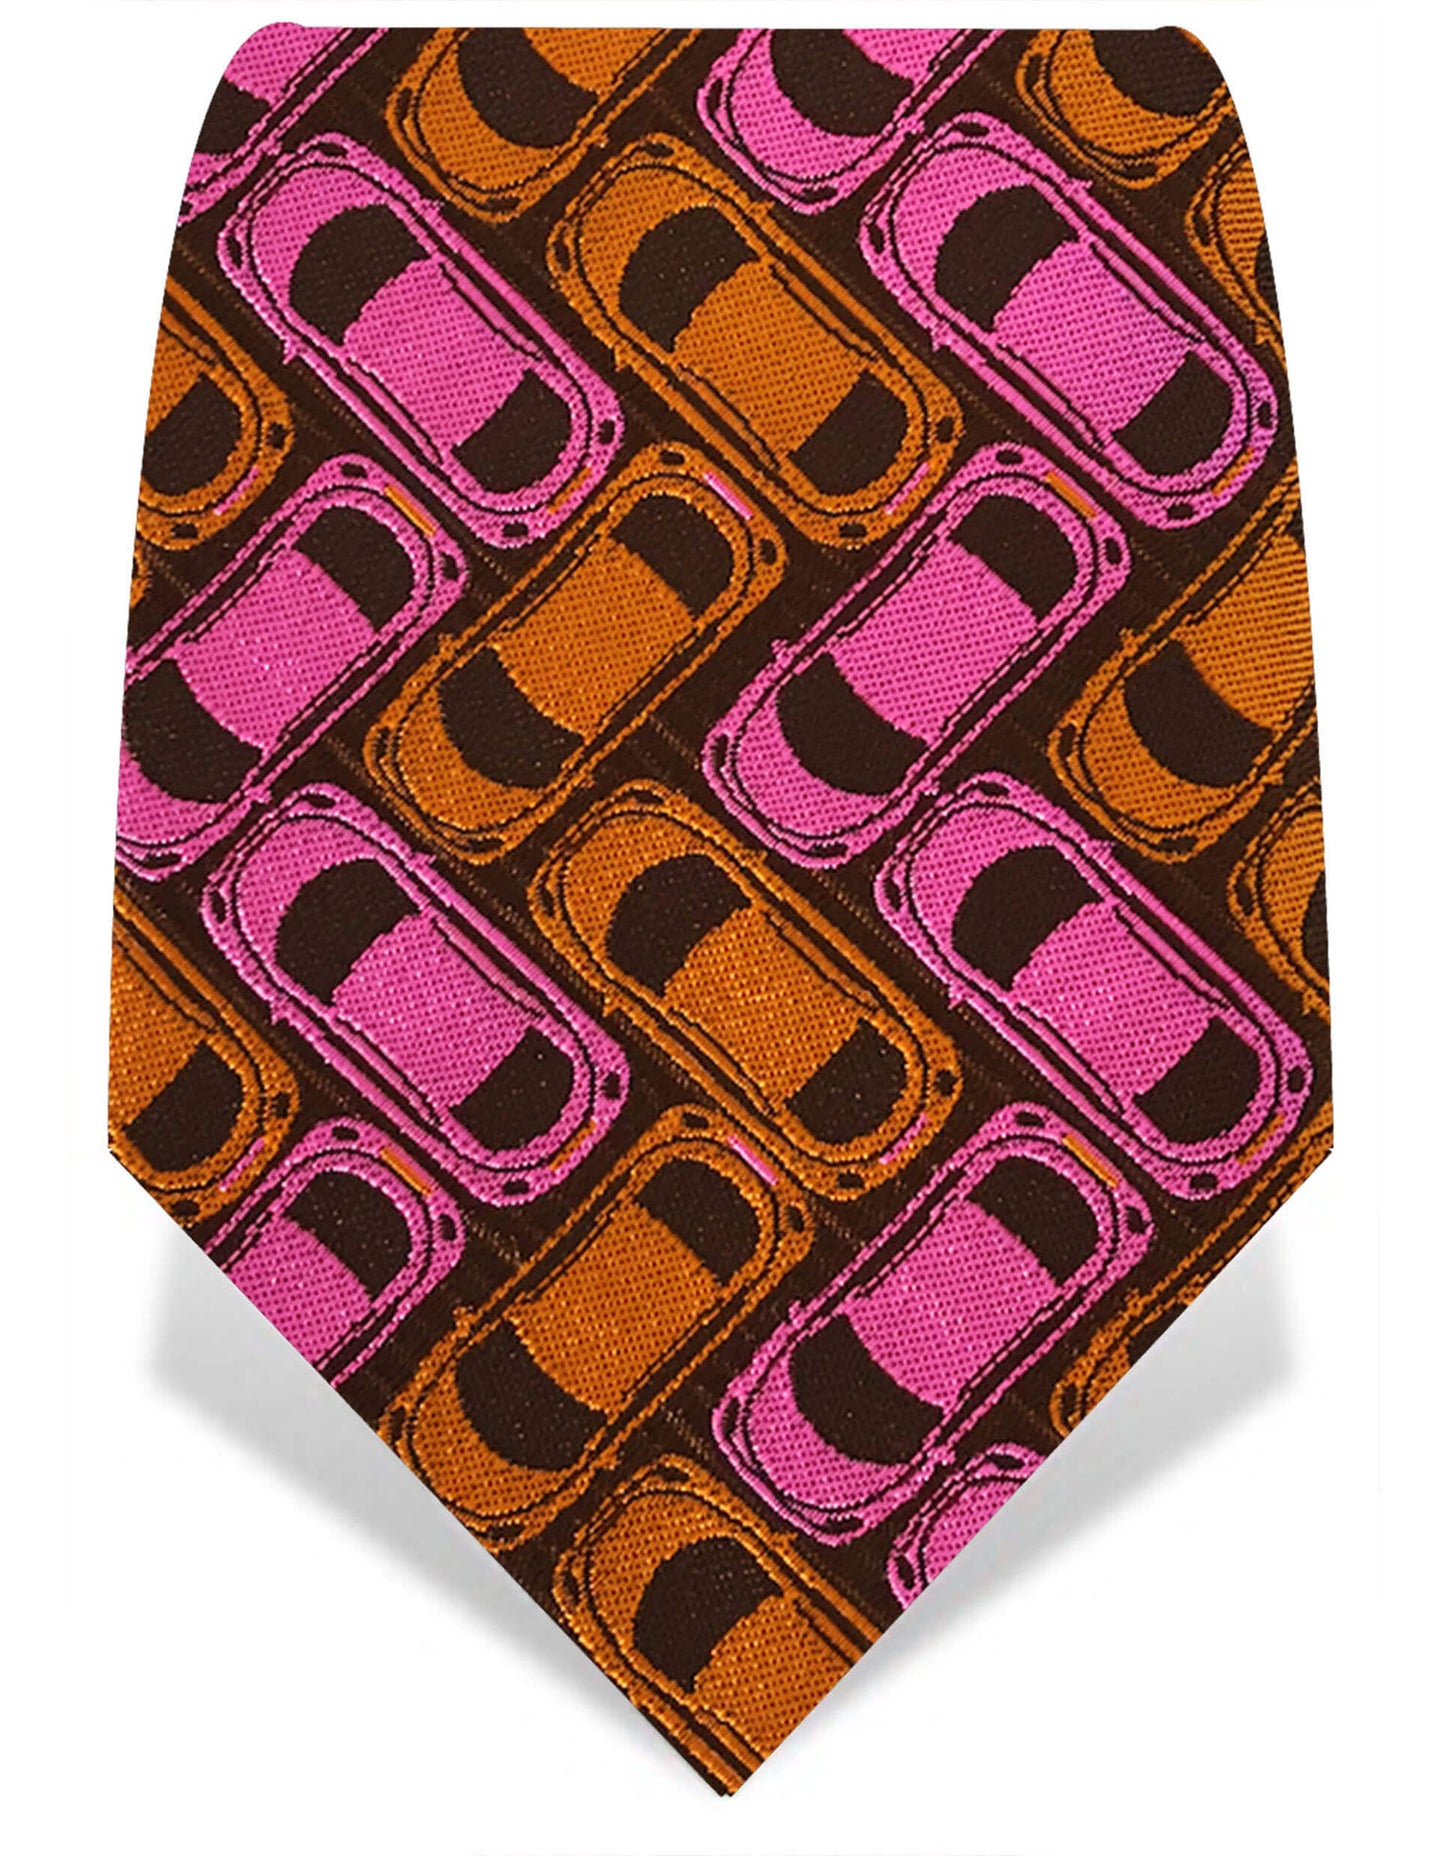 pink and orange tie 